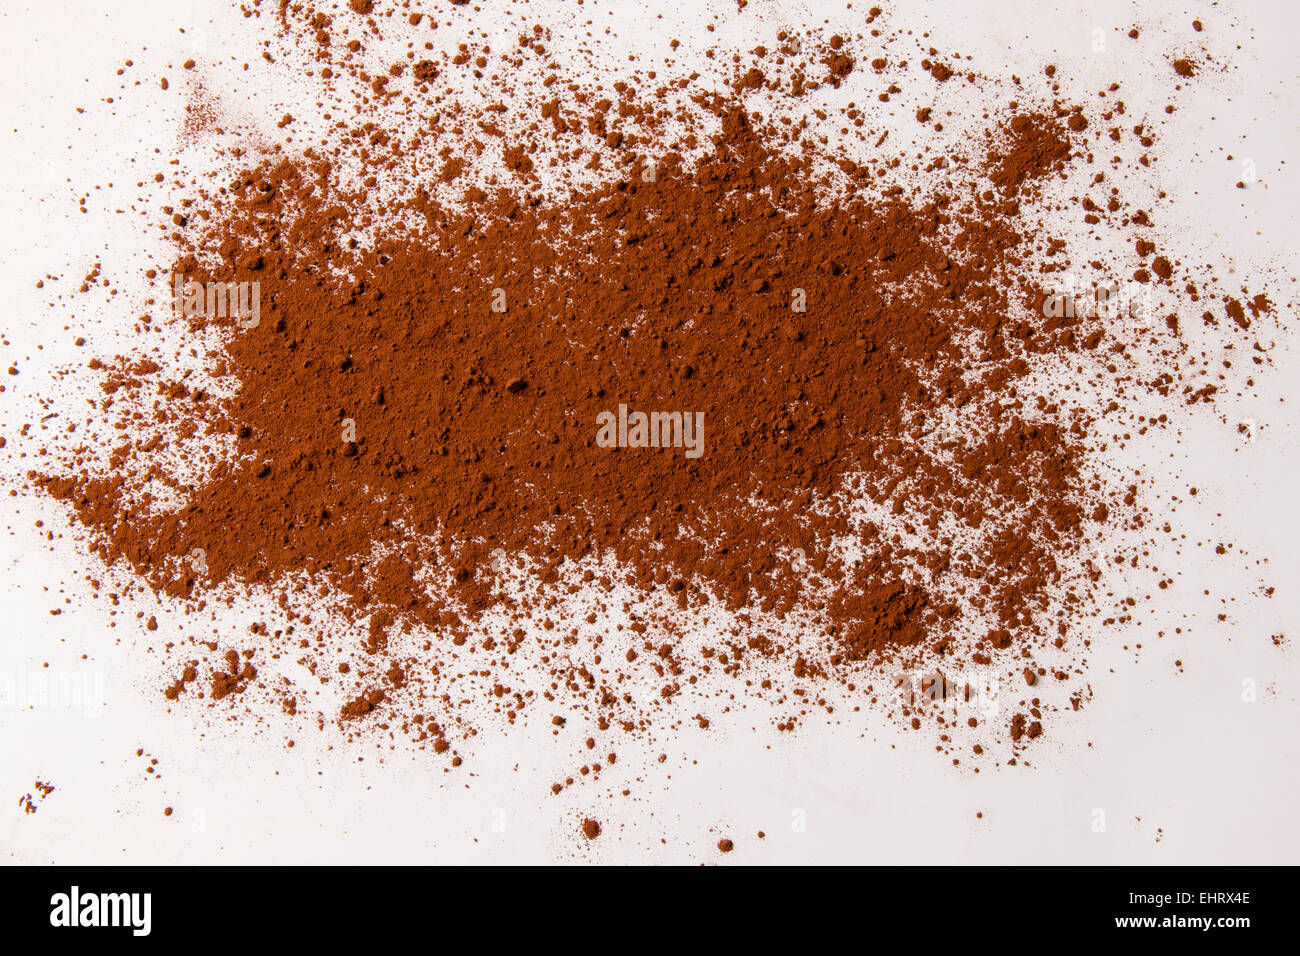 Chocolate cocoa powder on a plain white background Stock Photo